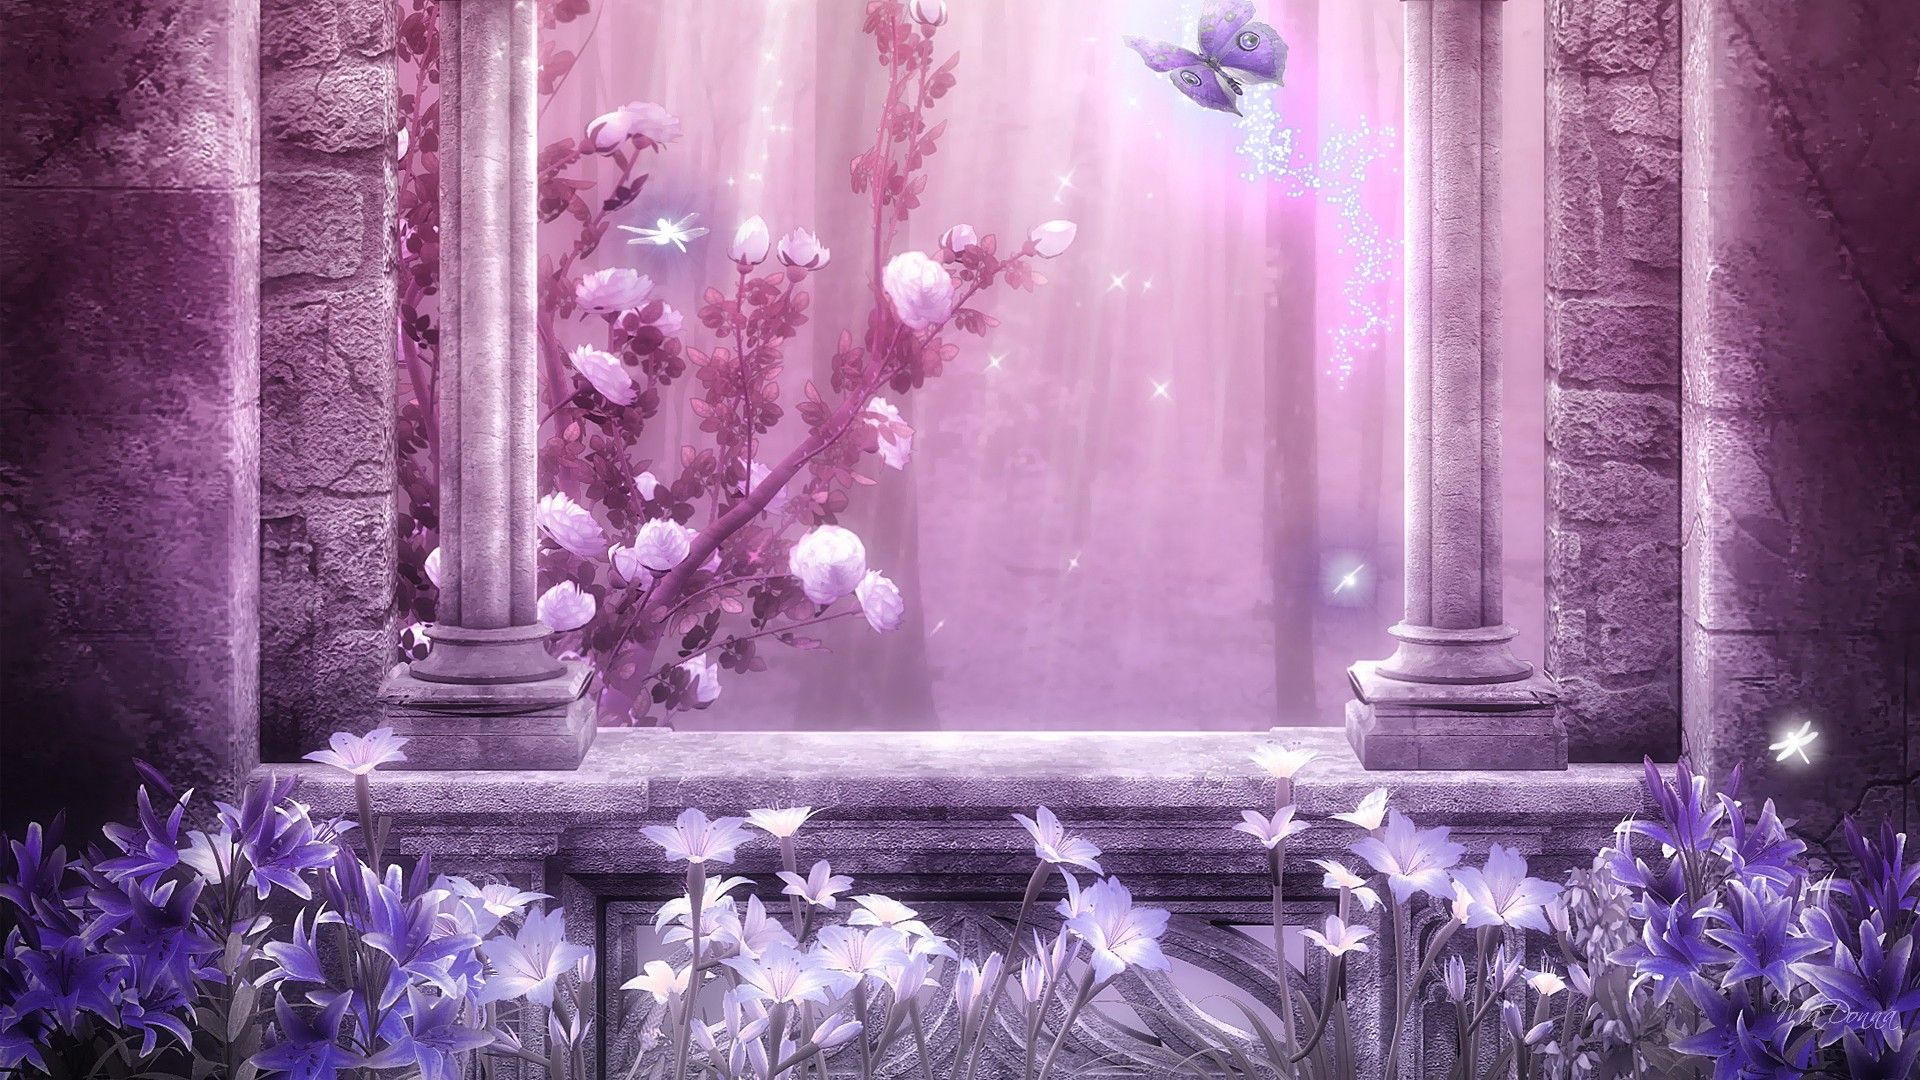 Pink Mystic wallpaper free. Mystic wallpaper, Beautiful flowers picture, Rose wallpaper